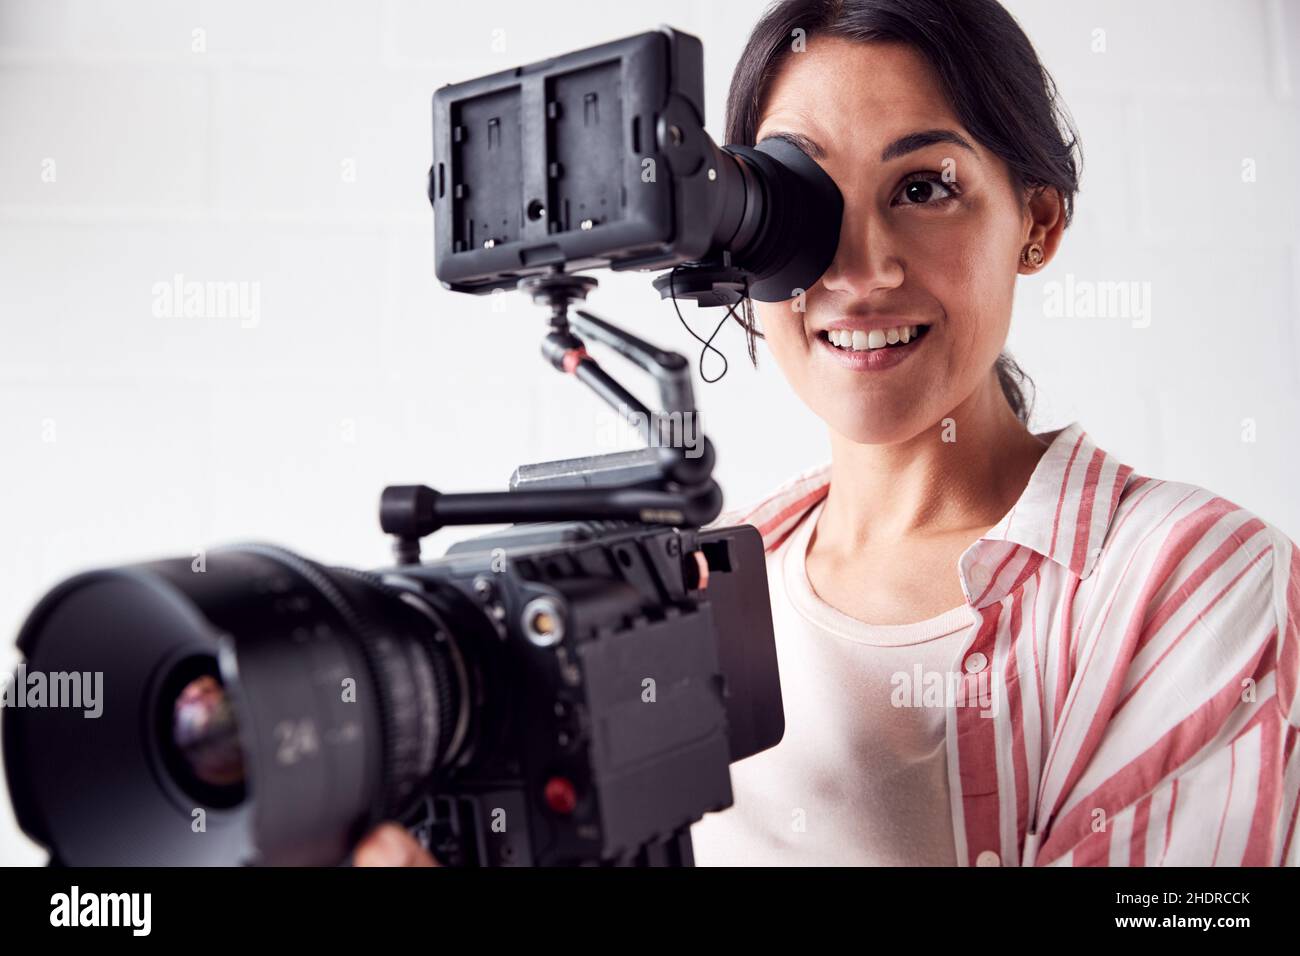 digital camera, filming, camerawoman, digital cameras, camerawomen Stock Photo